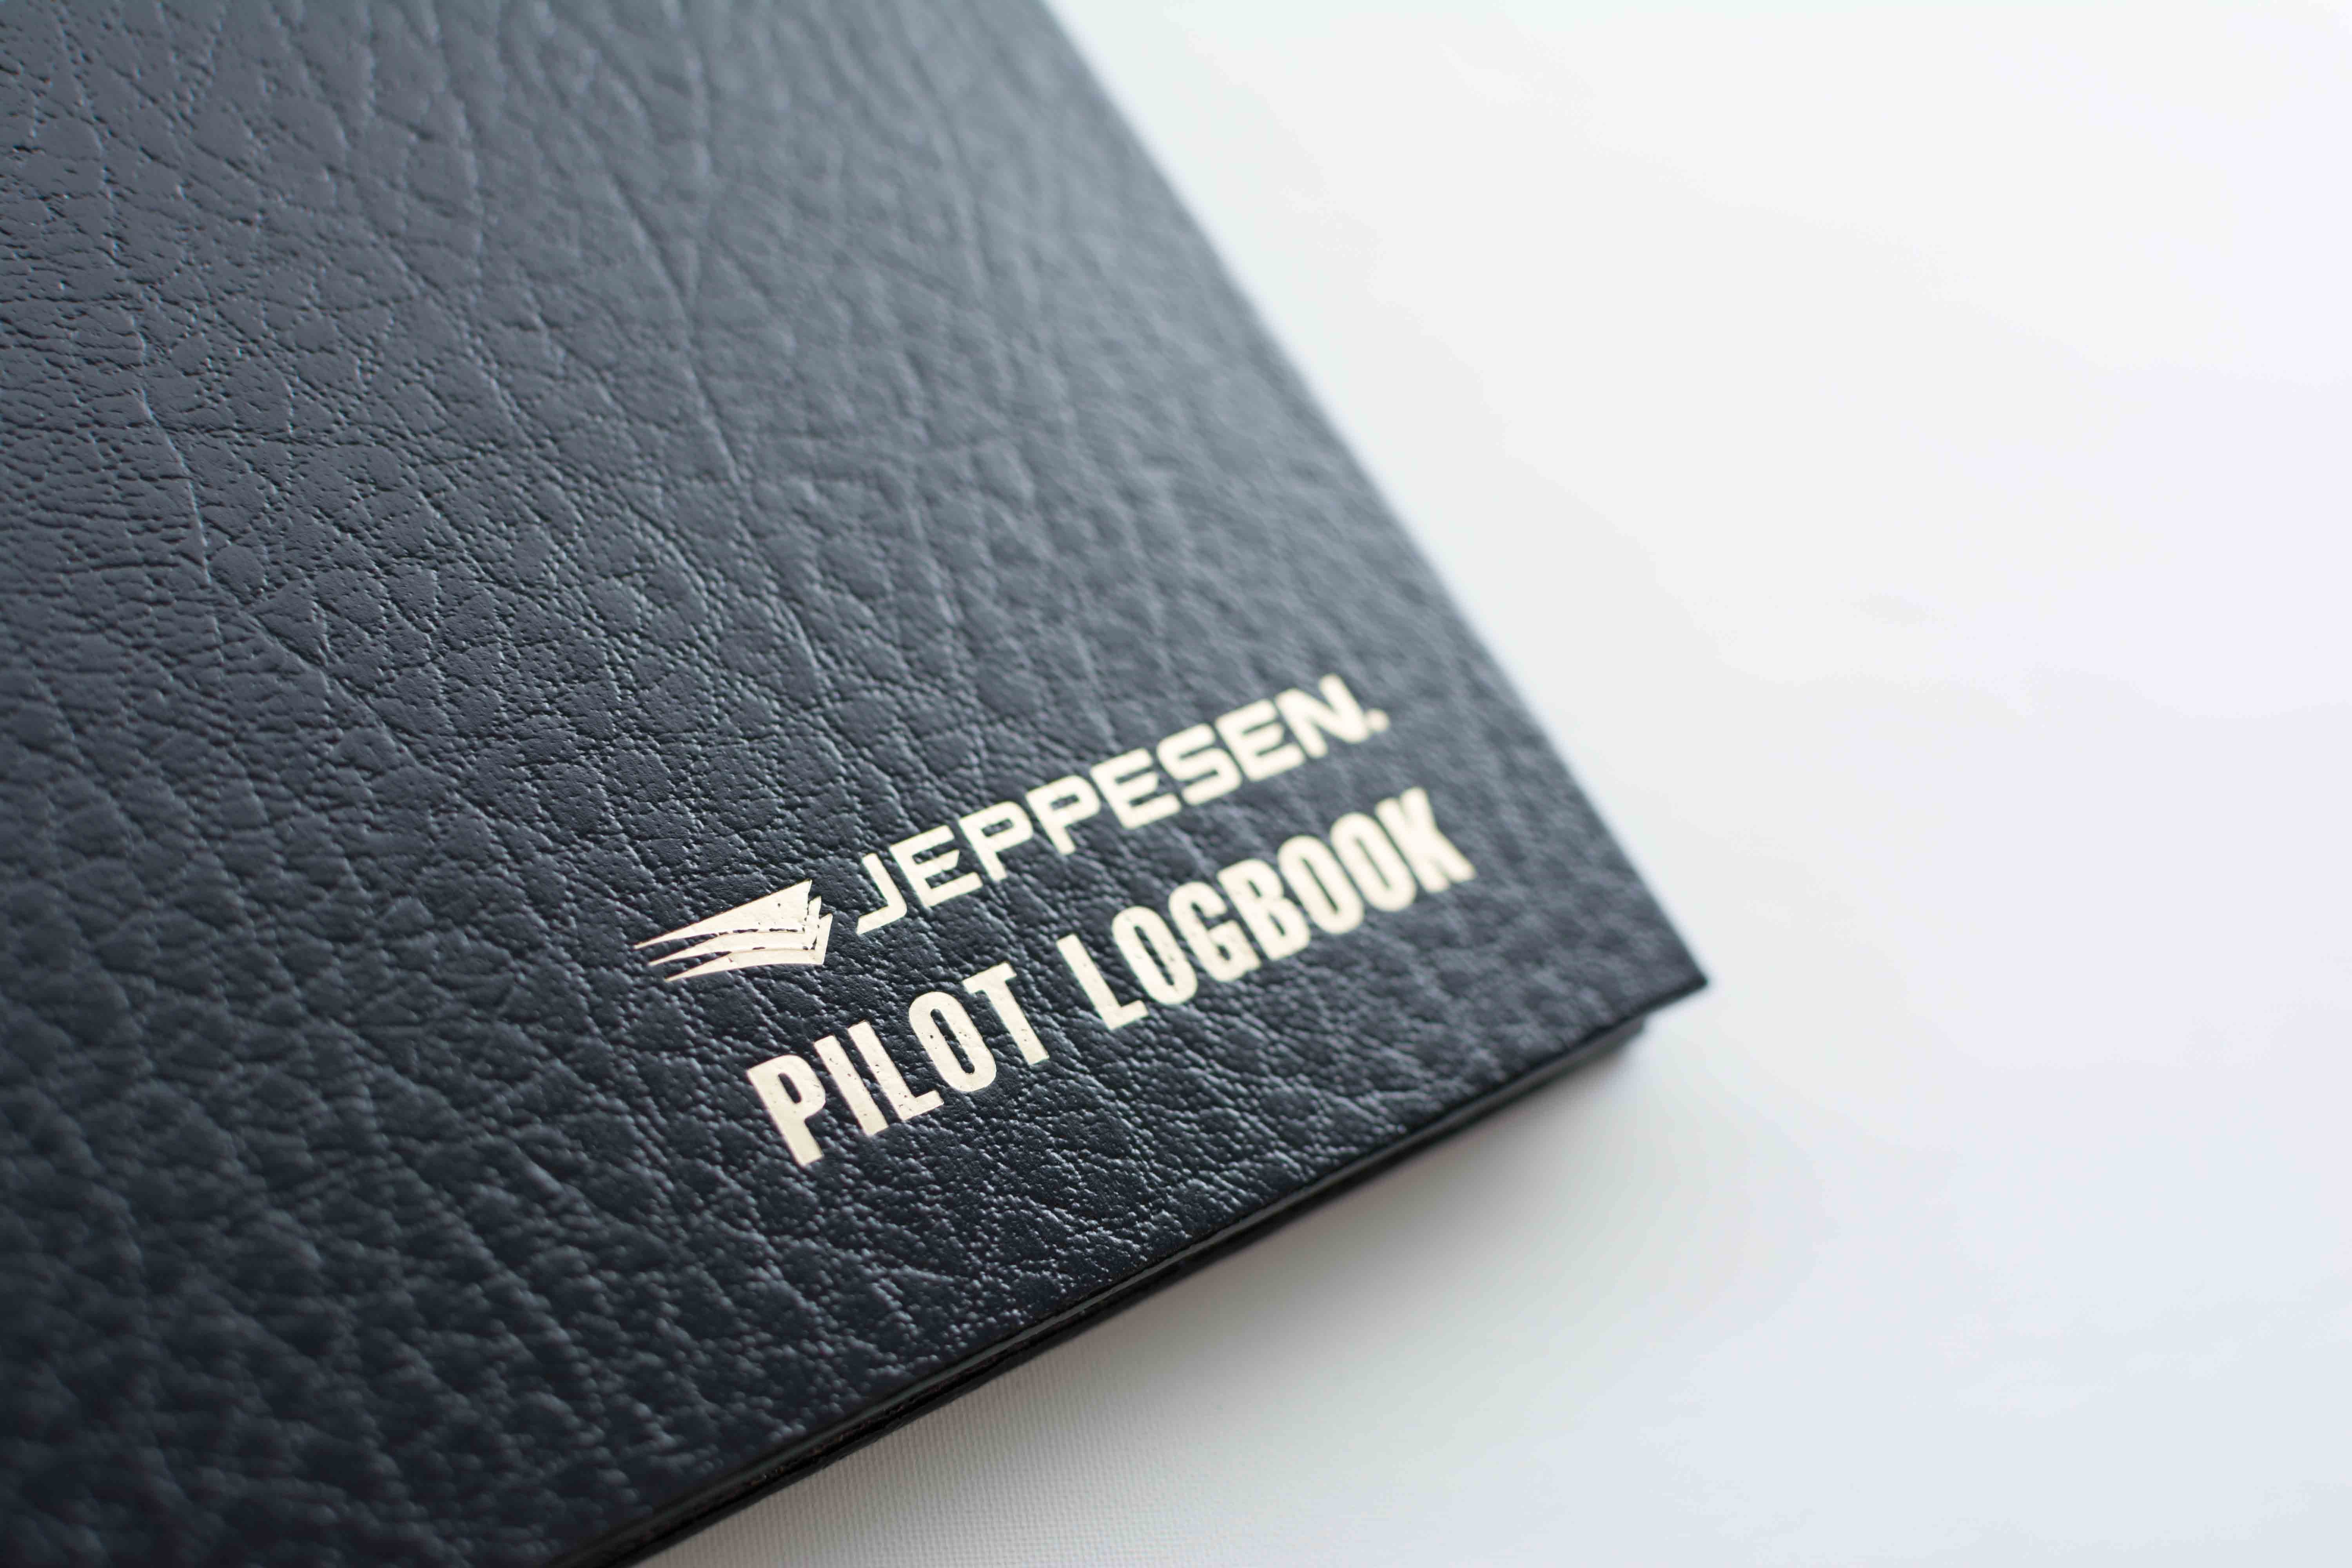 jeppesen professional european pilot logbook jaa